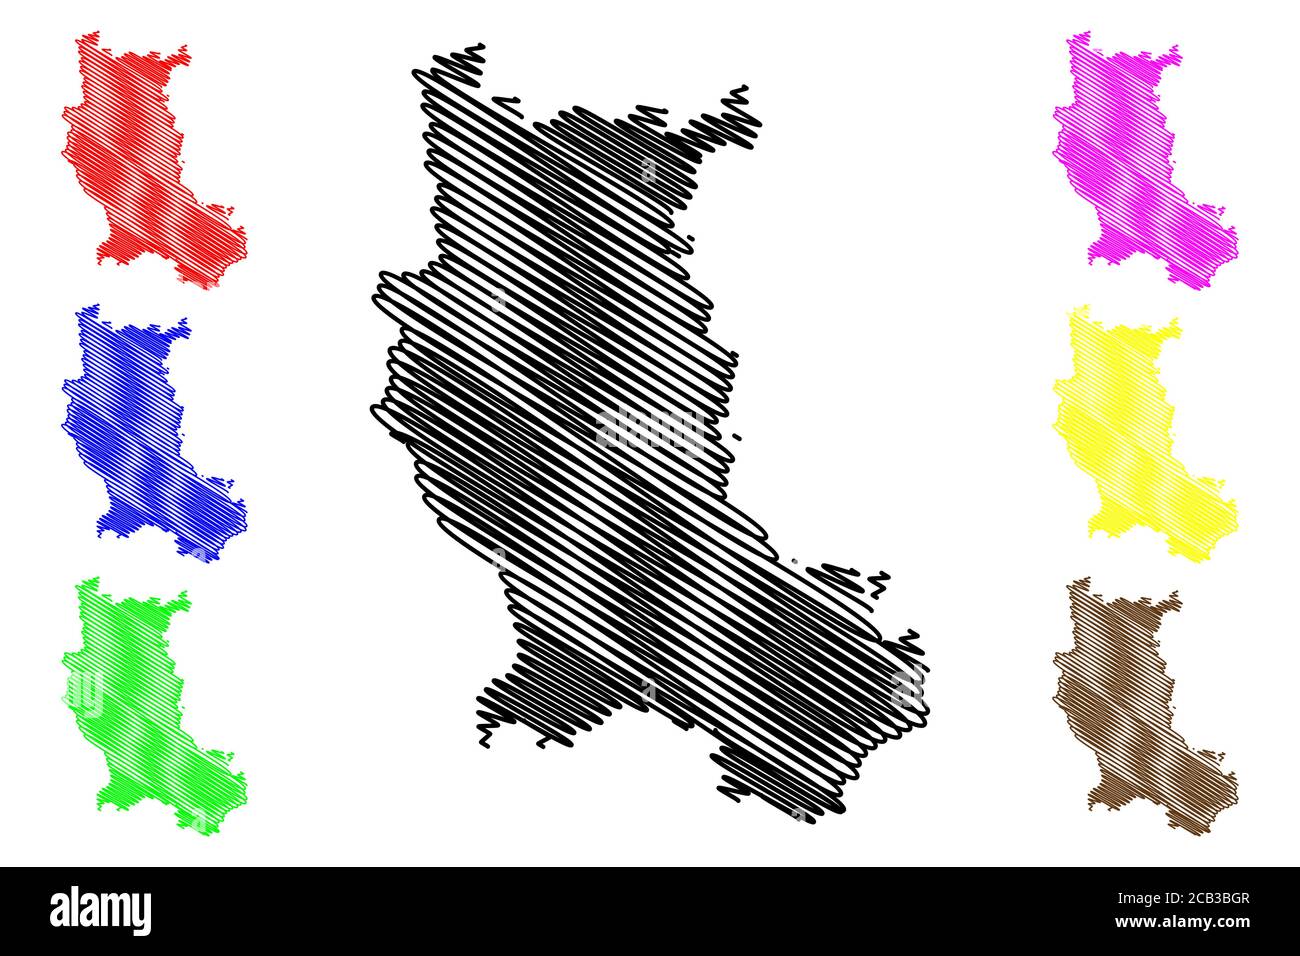 Département Loire (Frankreich, Frankreich, Republik Frankreich, Region Auvergne-Rhone-Alpes, ARA) Karte Vektorgrafik, Skizze Loire Karte Stock Vektor